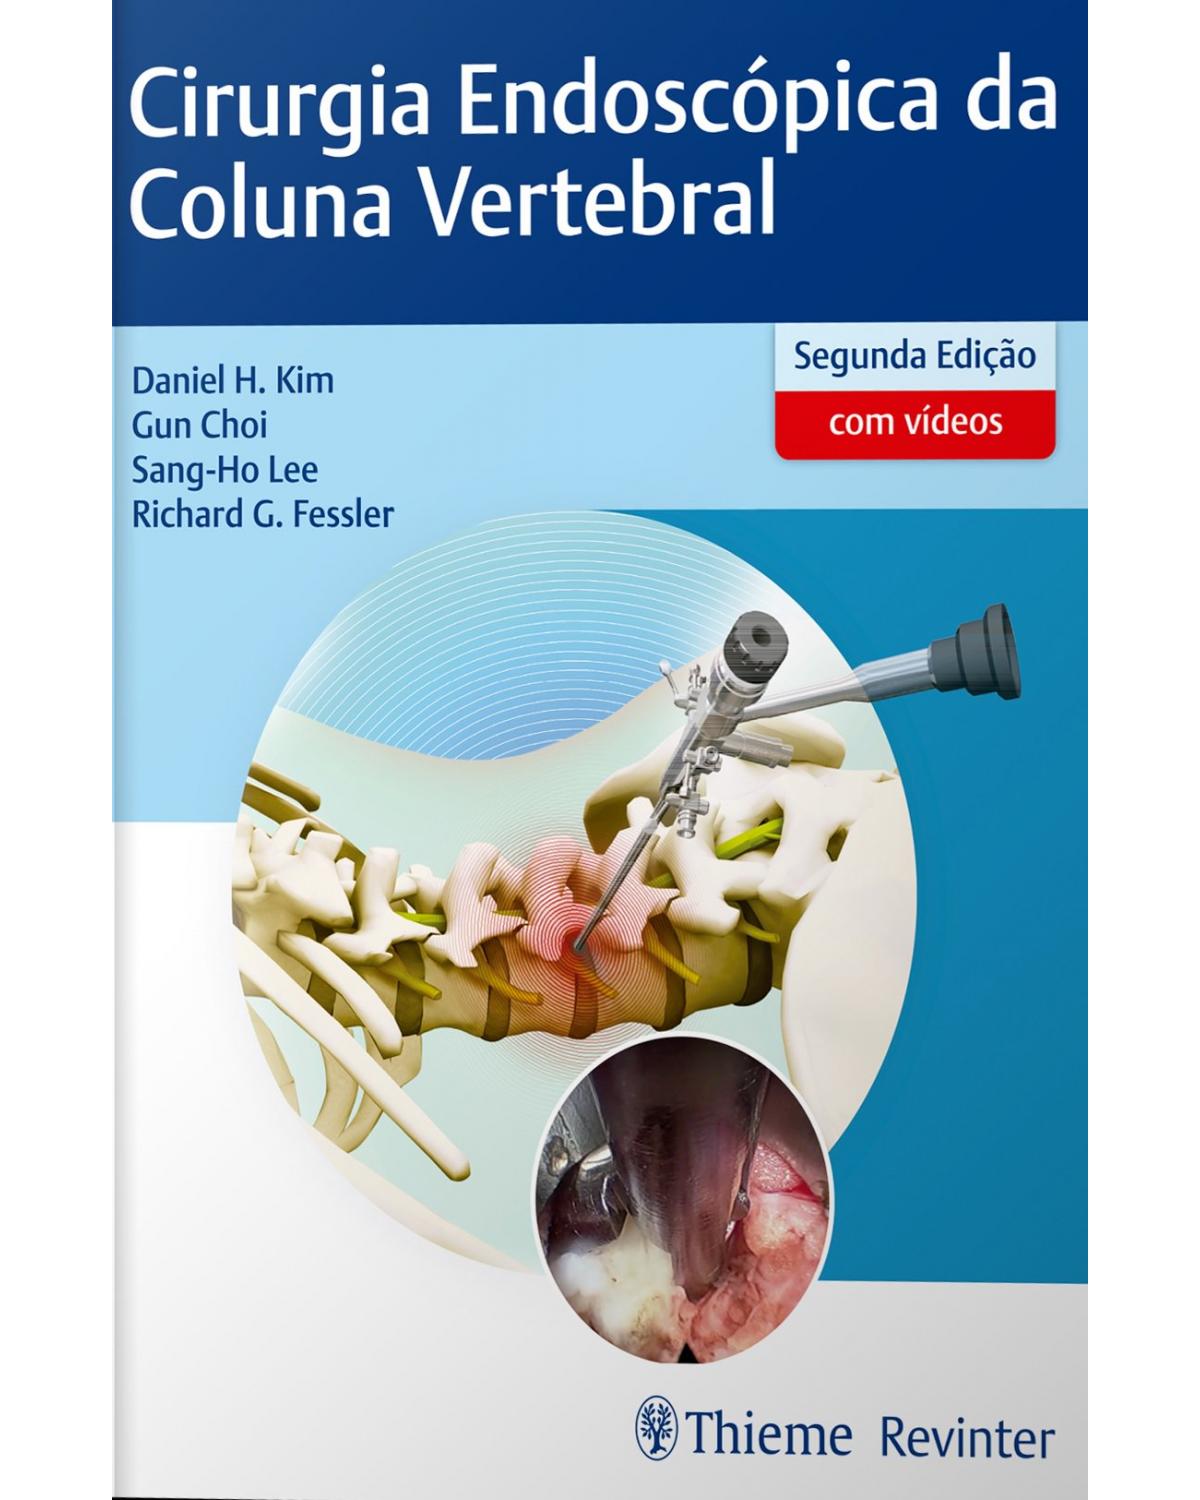 Cirurgia endoscópica da coluna vertebral - 2ª Edição | 2019